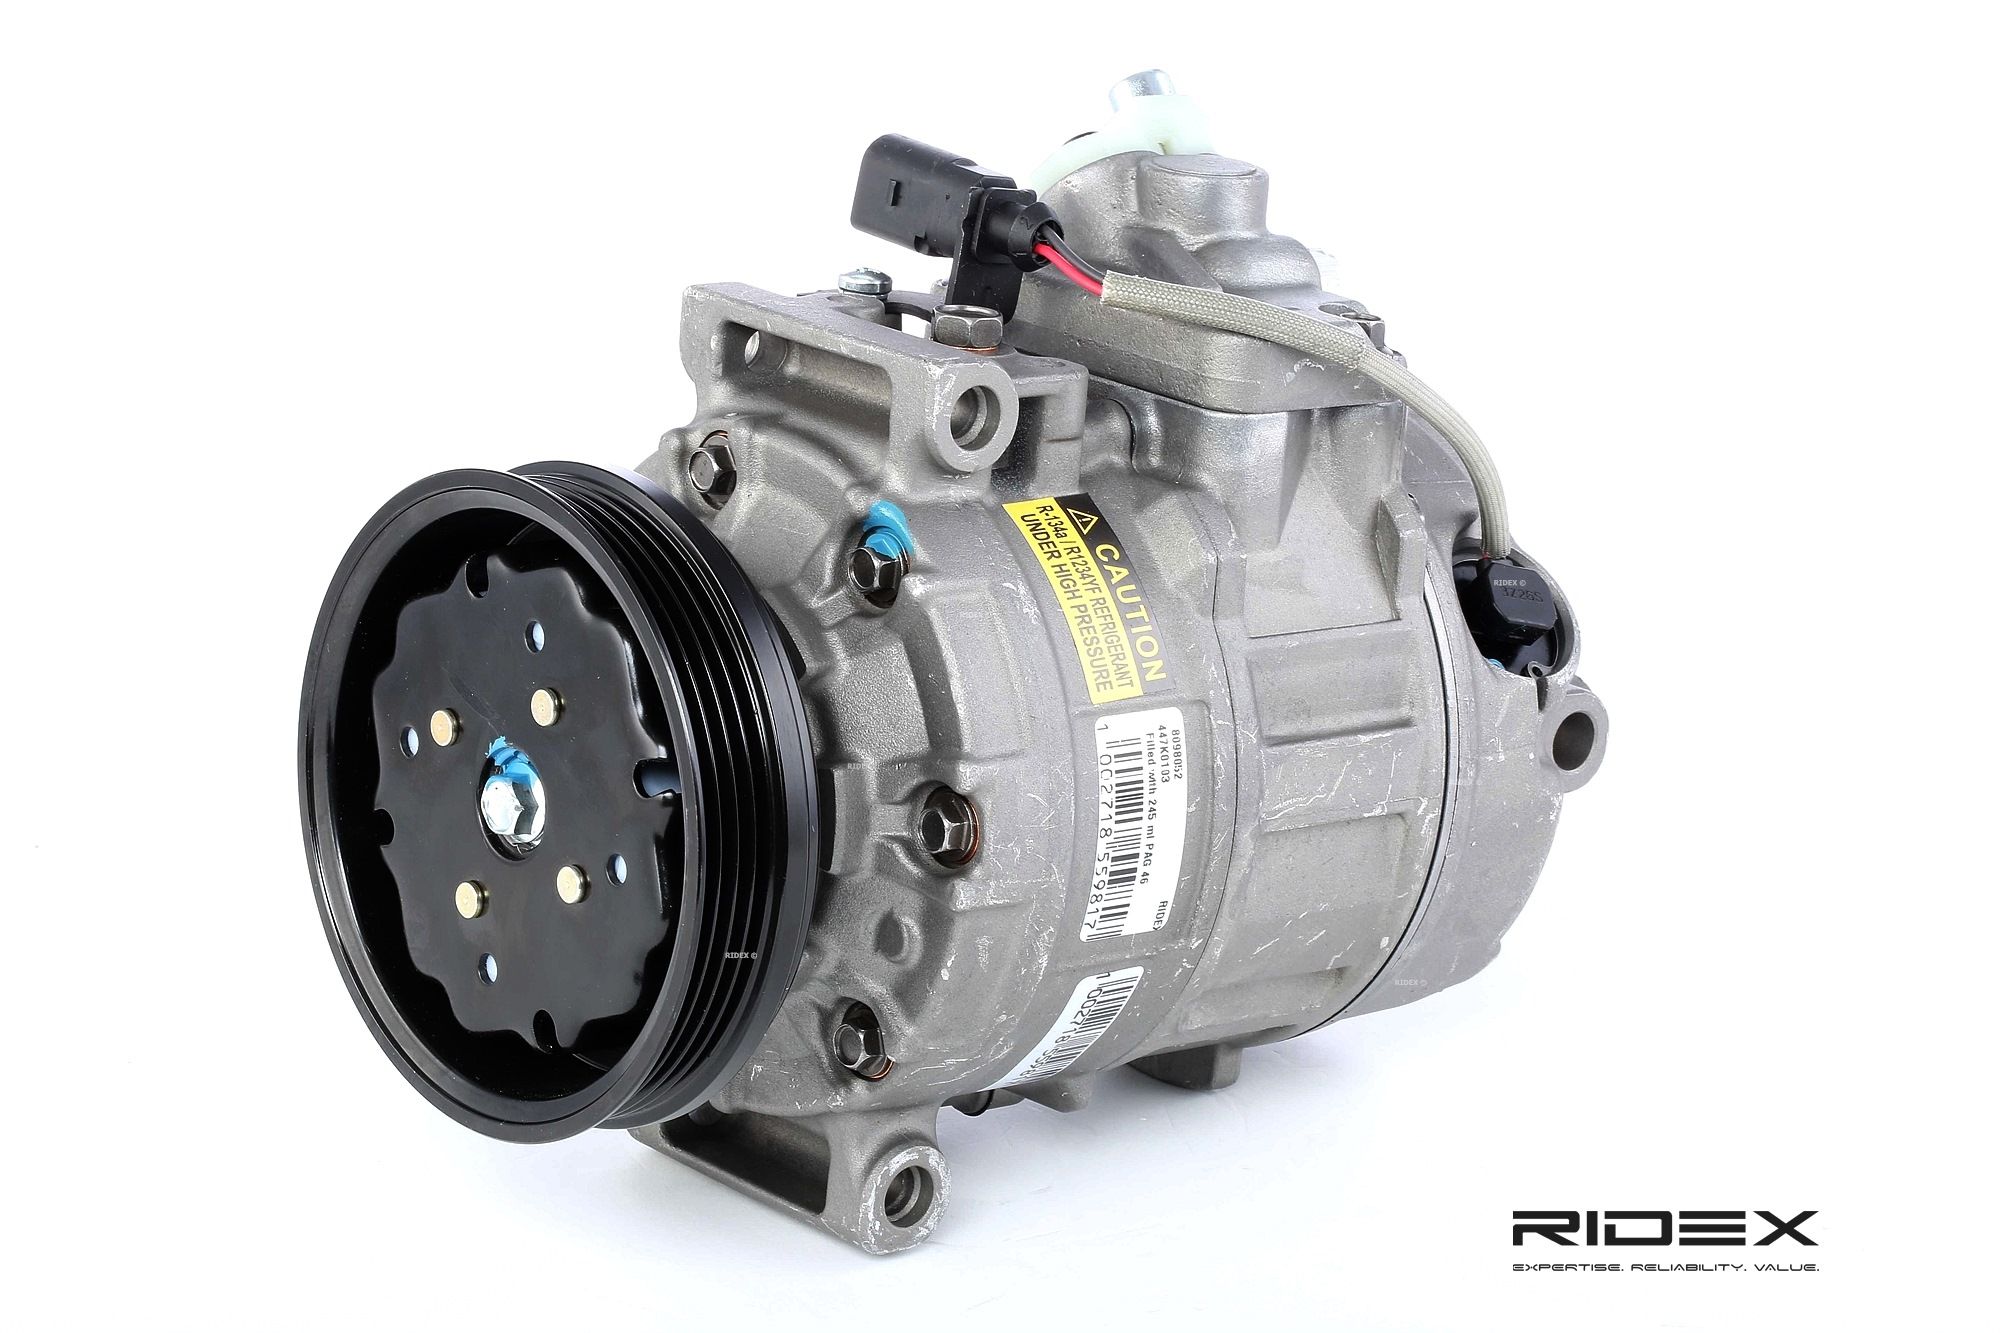 RIDEX 447K0103 Air conditioning compressor Denso 7SEU16C, PAG 46, with PAG compressor oil